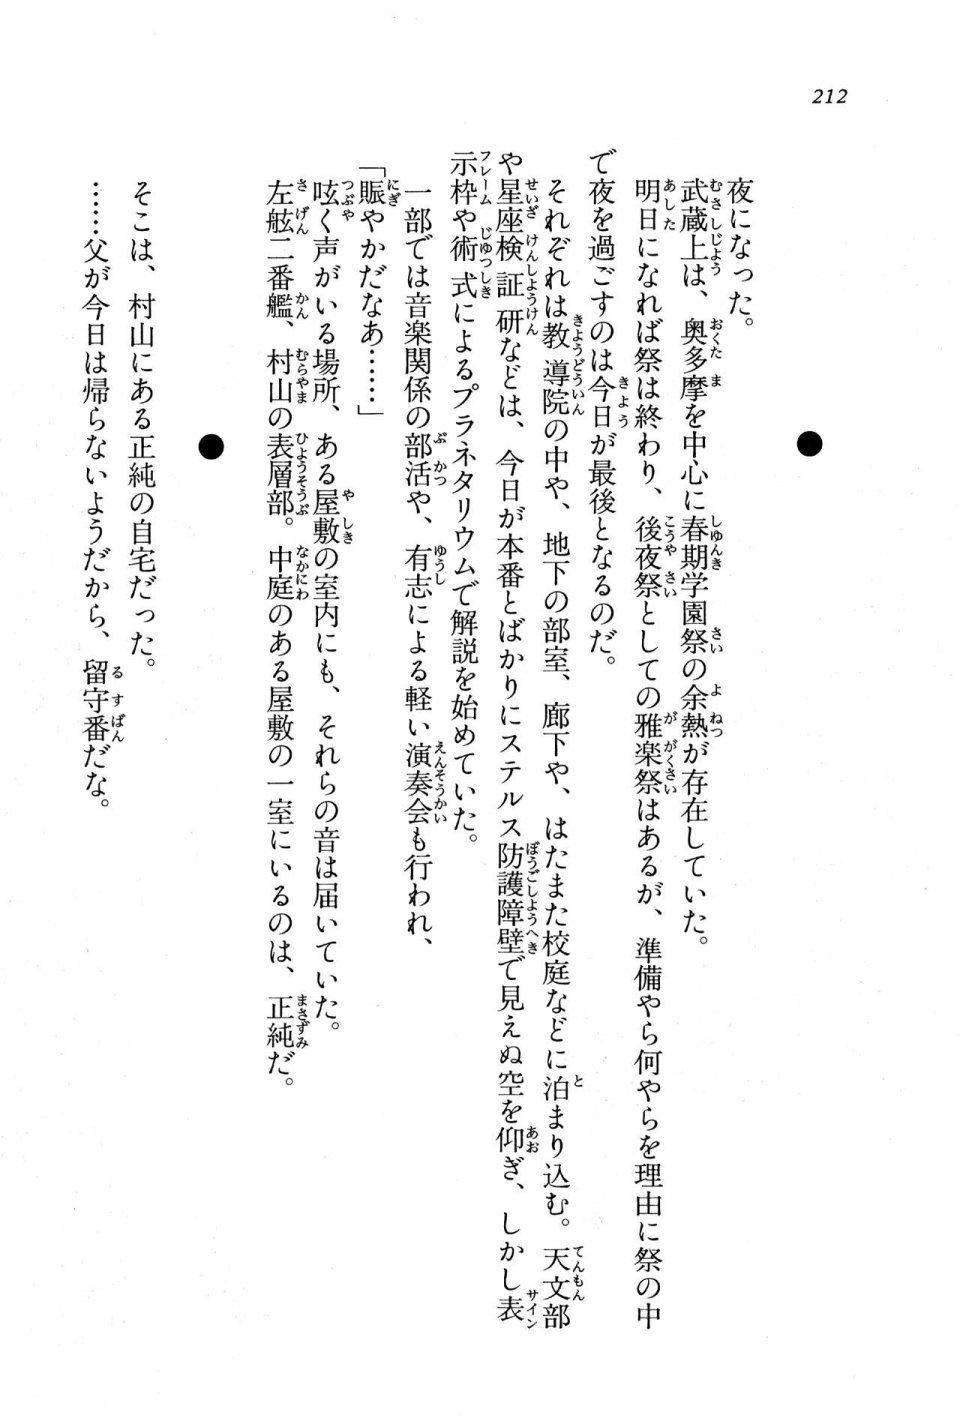 Kyoukai Senjou no Horizon BD Special Mininovel Vol 8(4B) - Photo #216